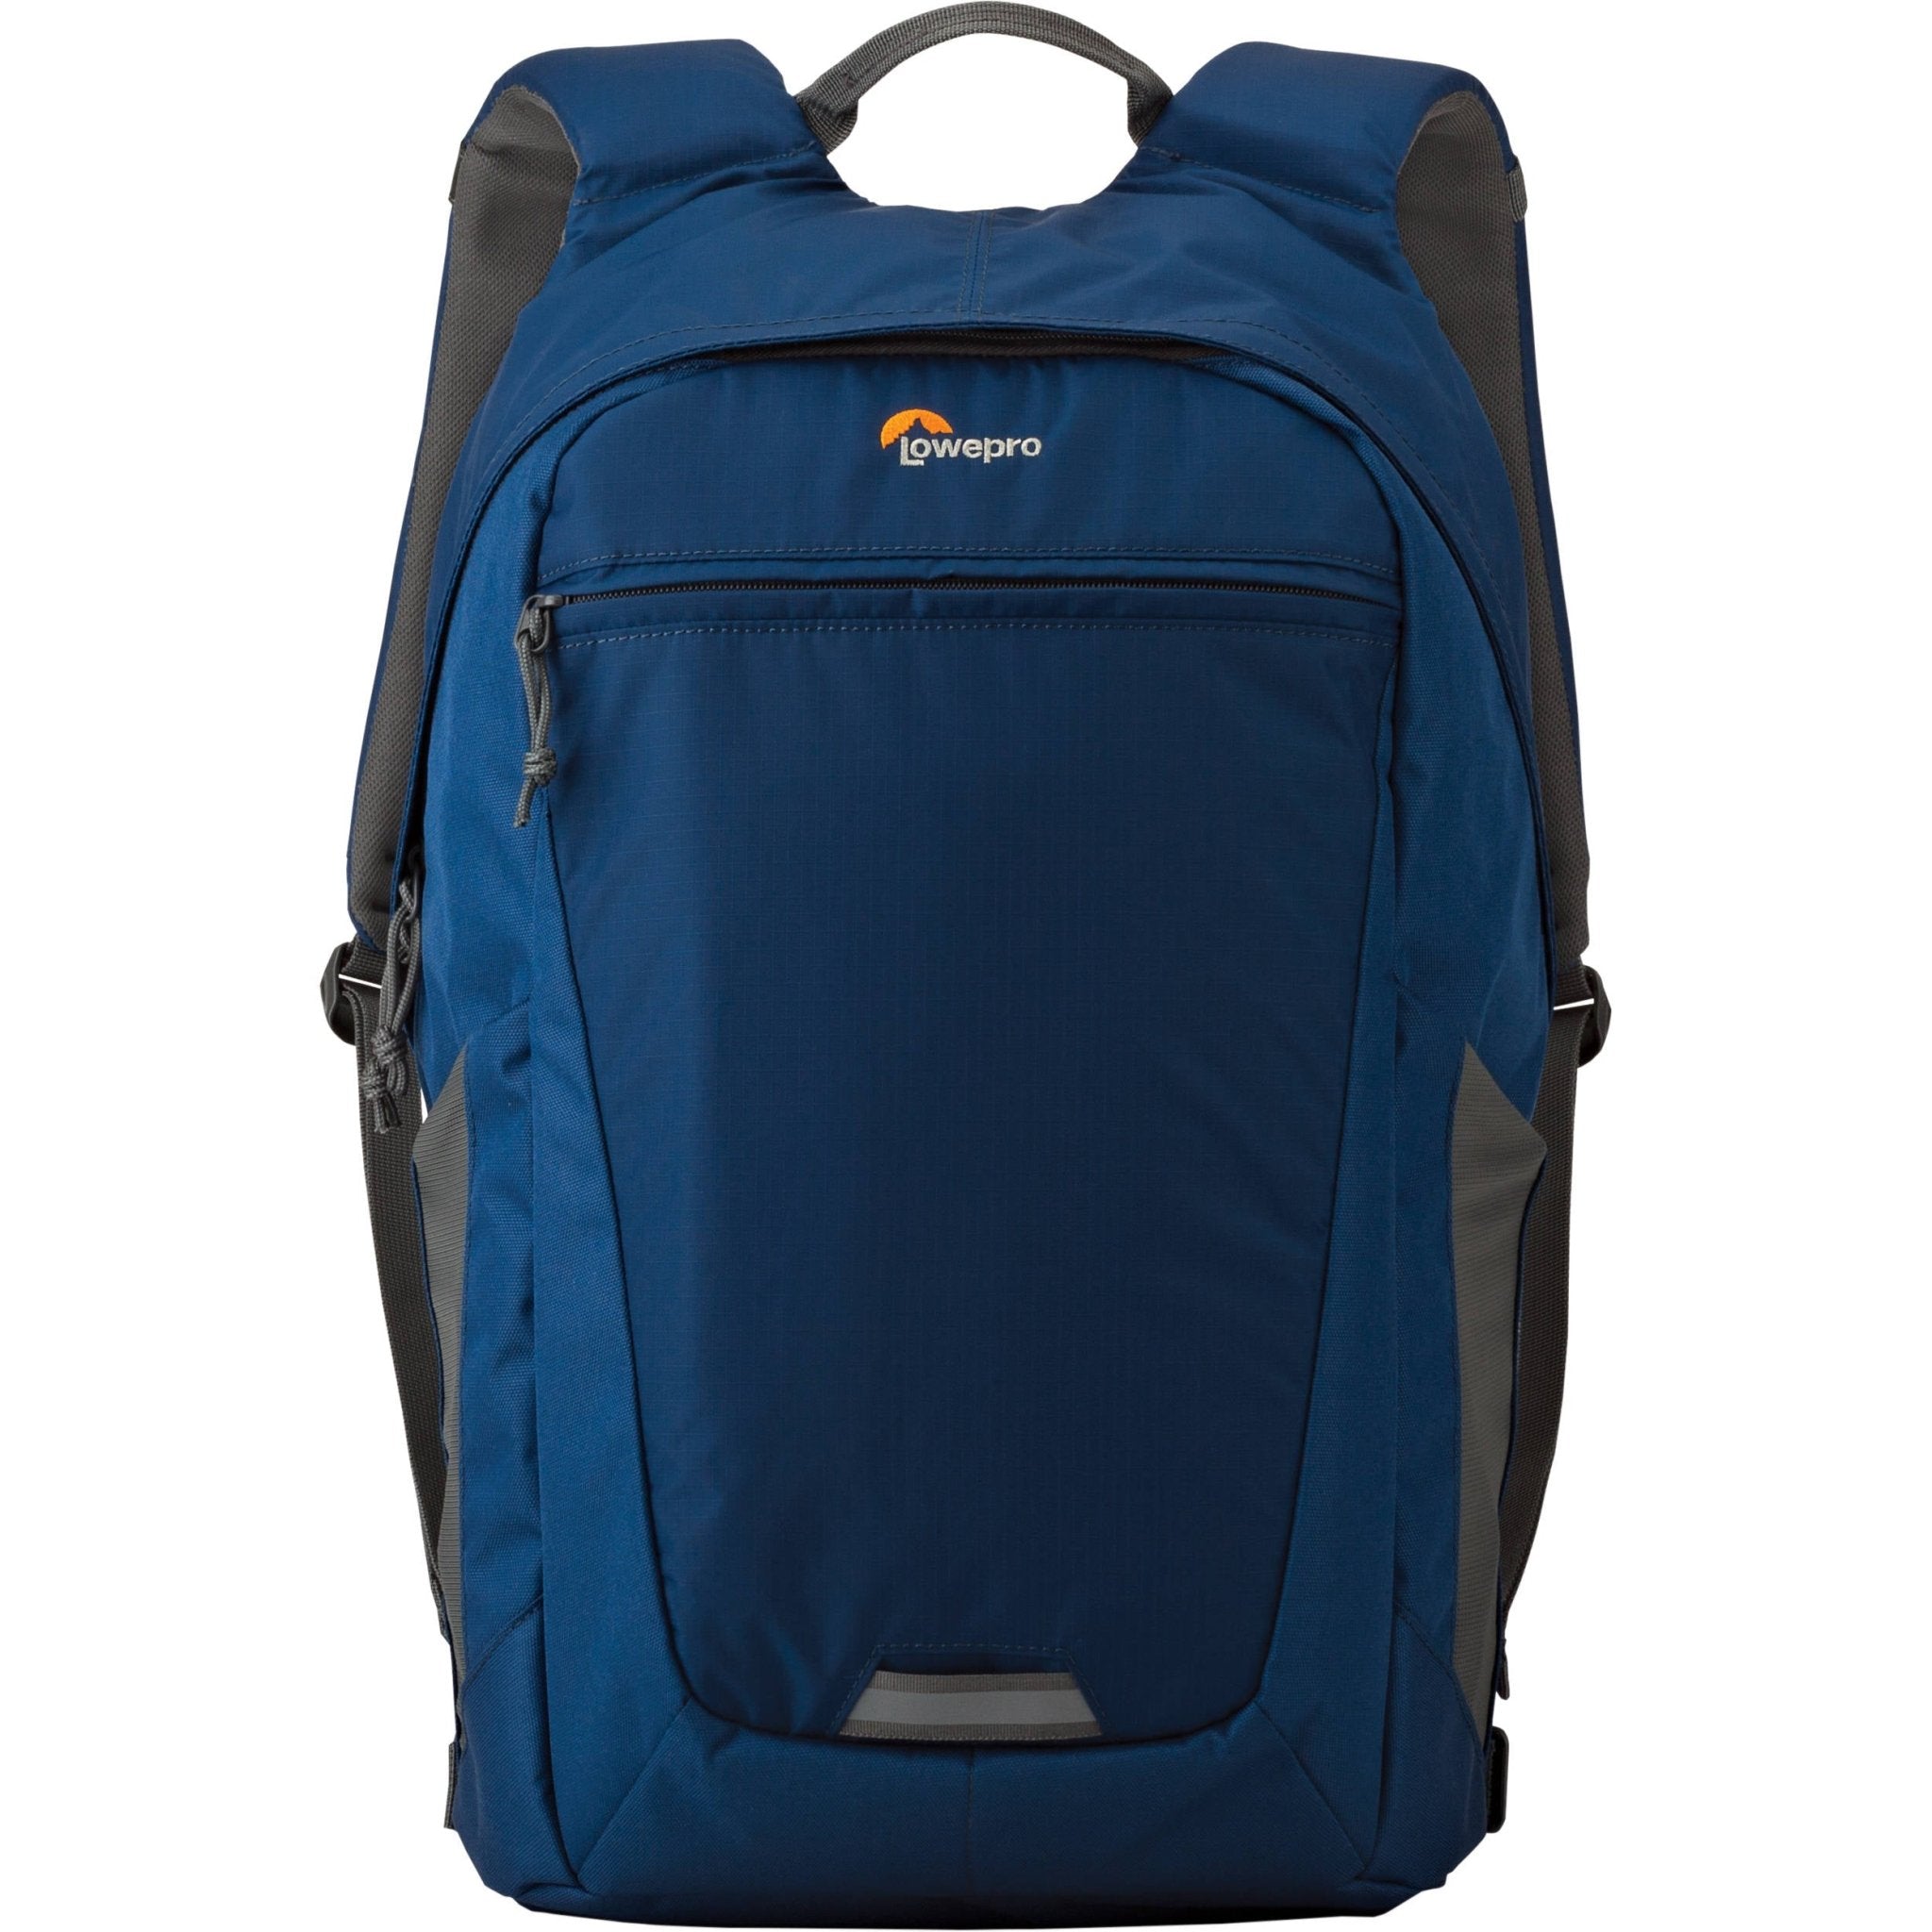 Lowepro Photo Hatchback Series BP 250 AW II Backpack (Midnight Blue/Gray) - The Camerashop